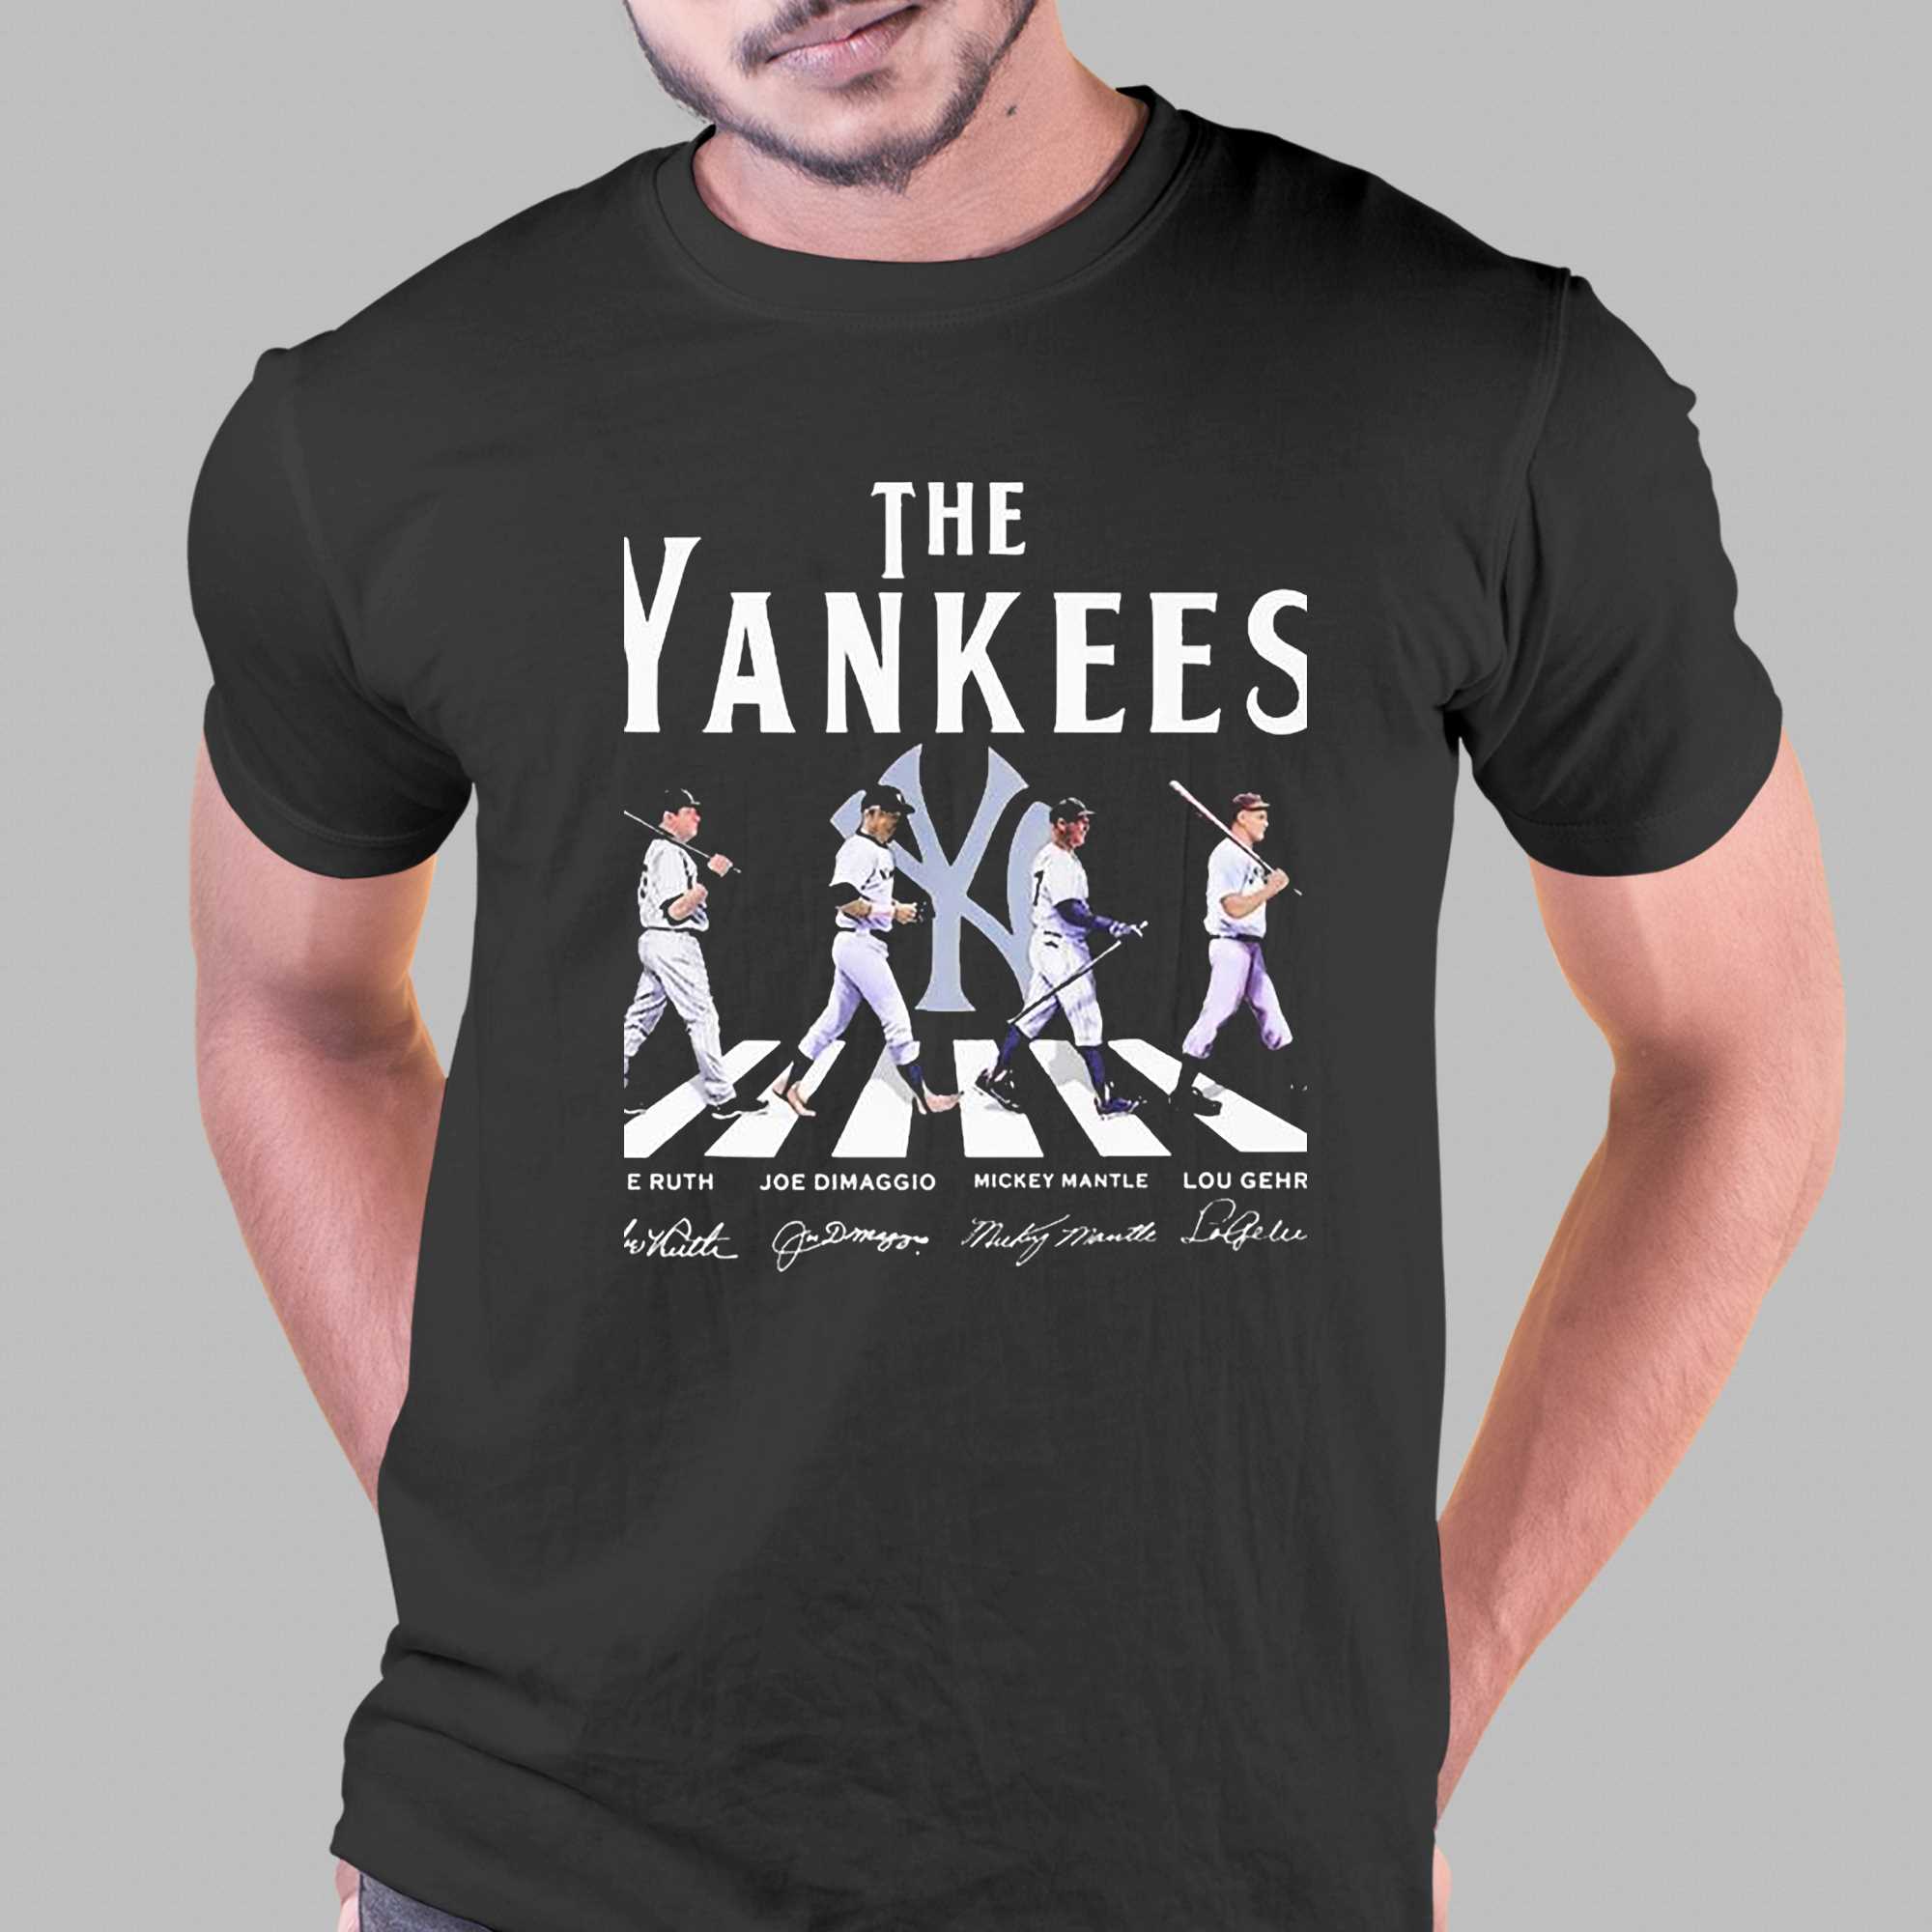 The Yankees Players Signature Shirt New York baseball M.L.B abbey road shirt